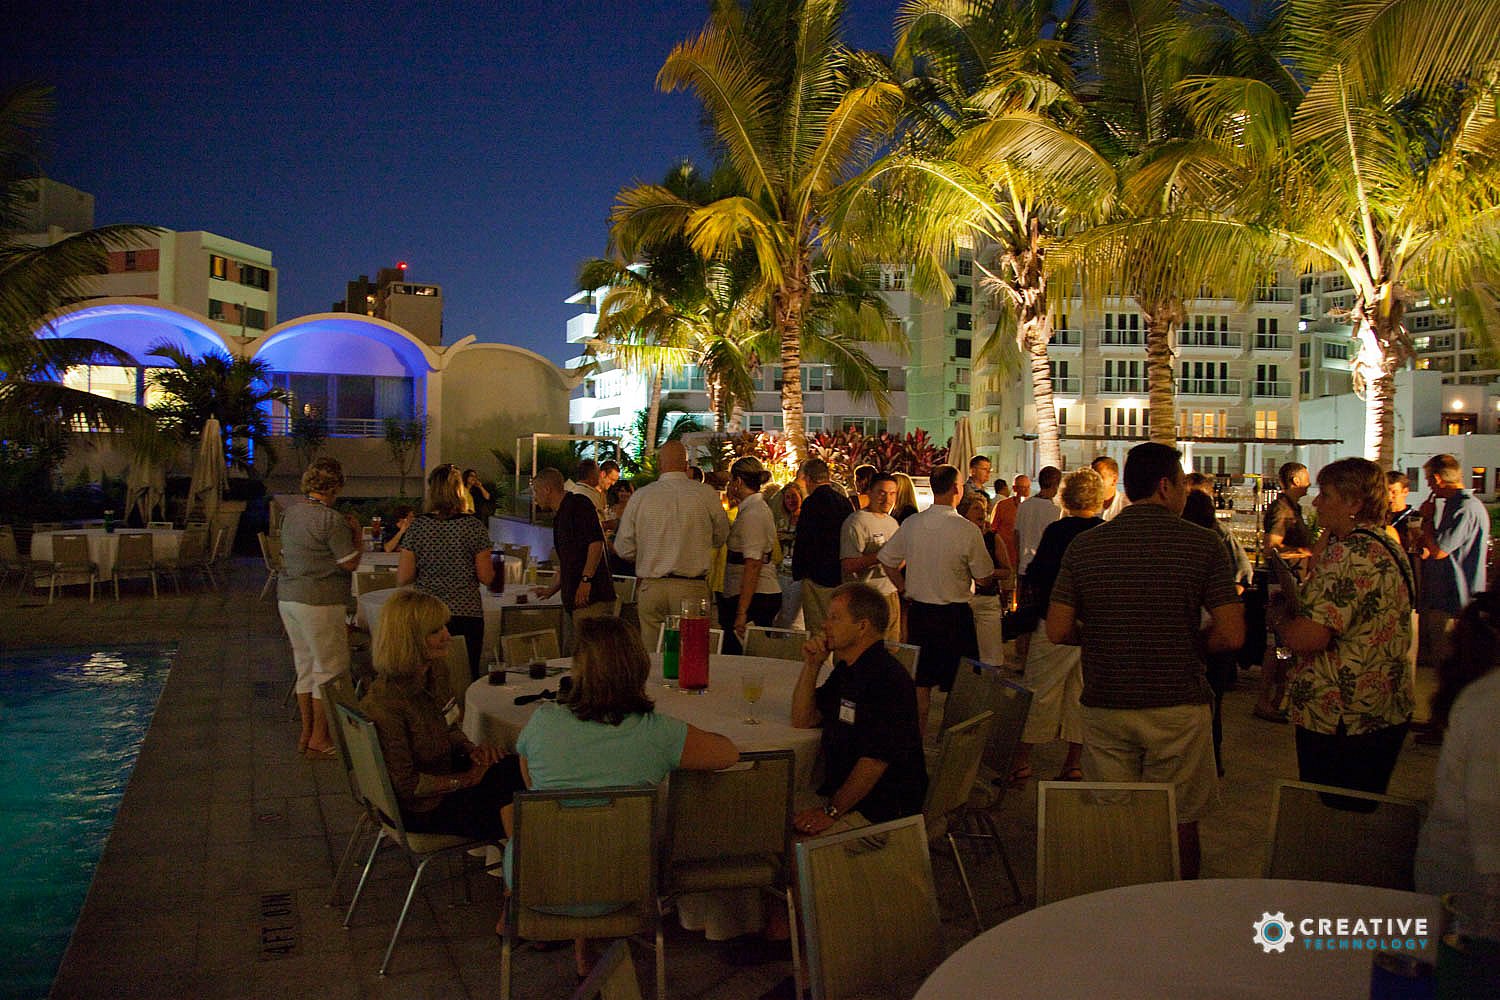 2009 Annual Conference - San Juan